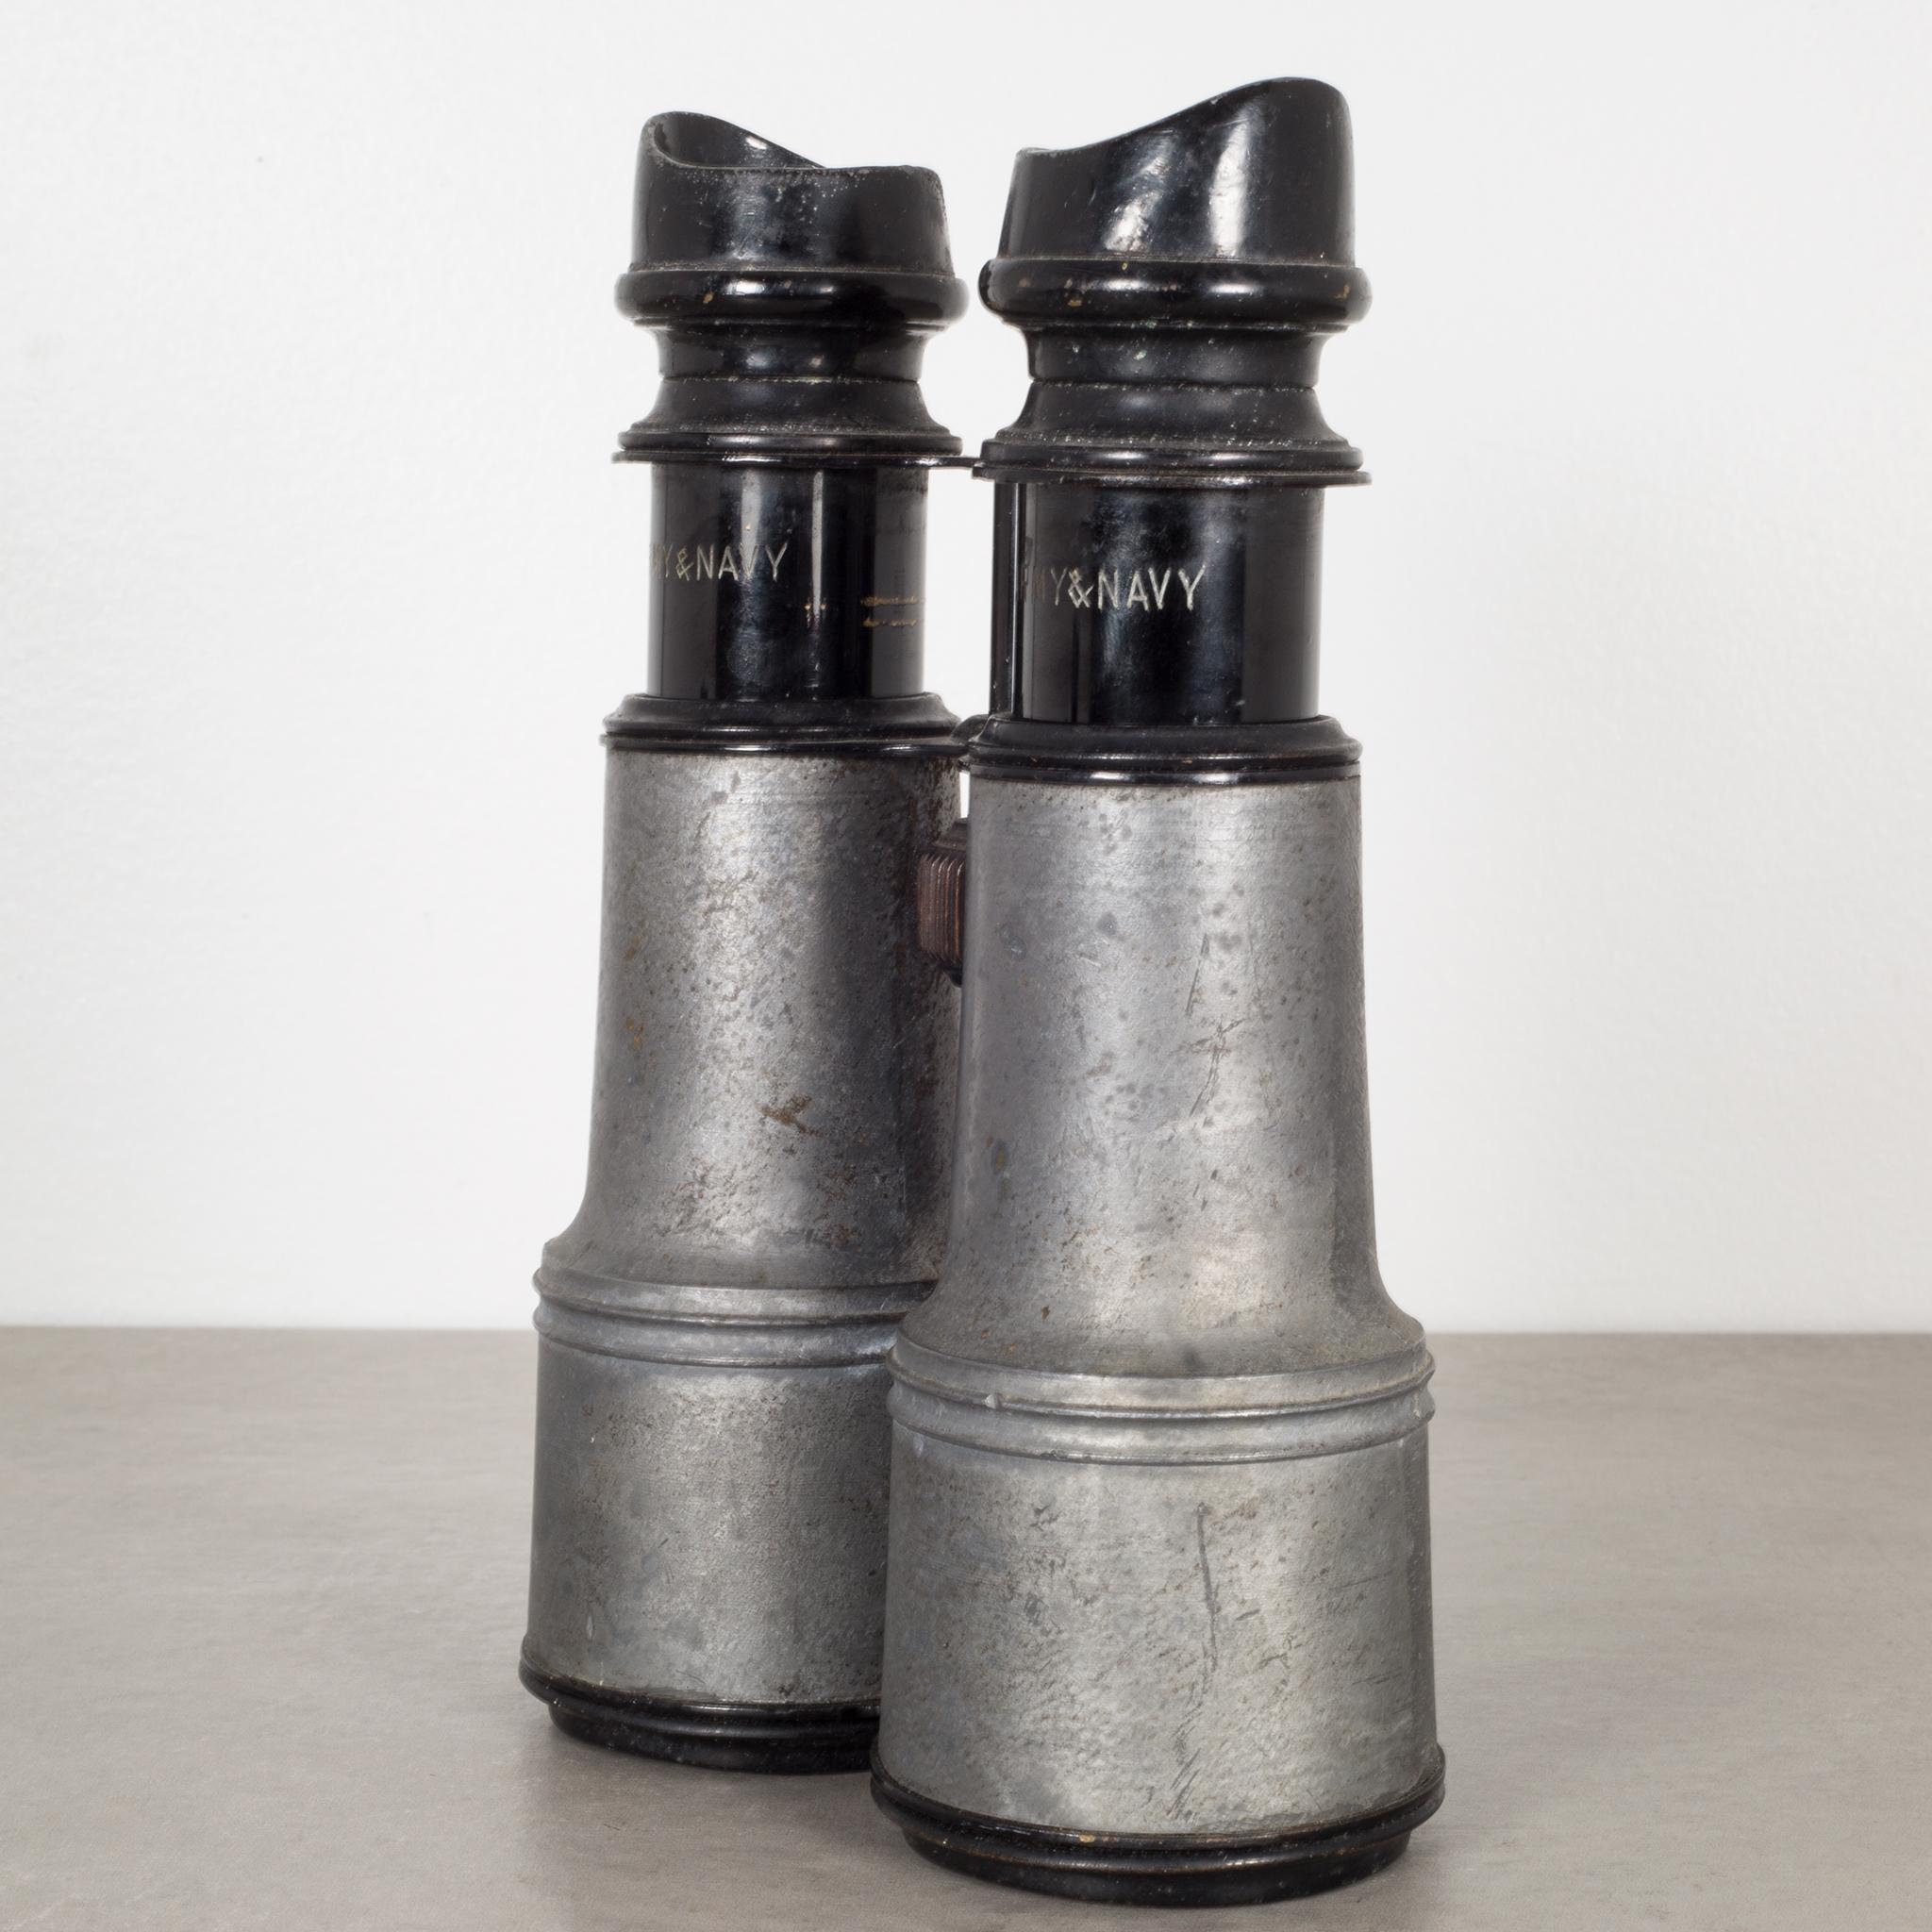 About

This is an original pair of military binoculars by Sportier Paris. This large pair of binoculars has 